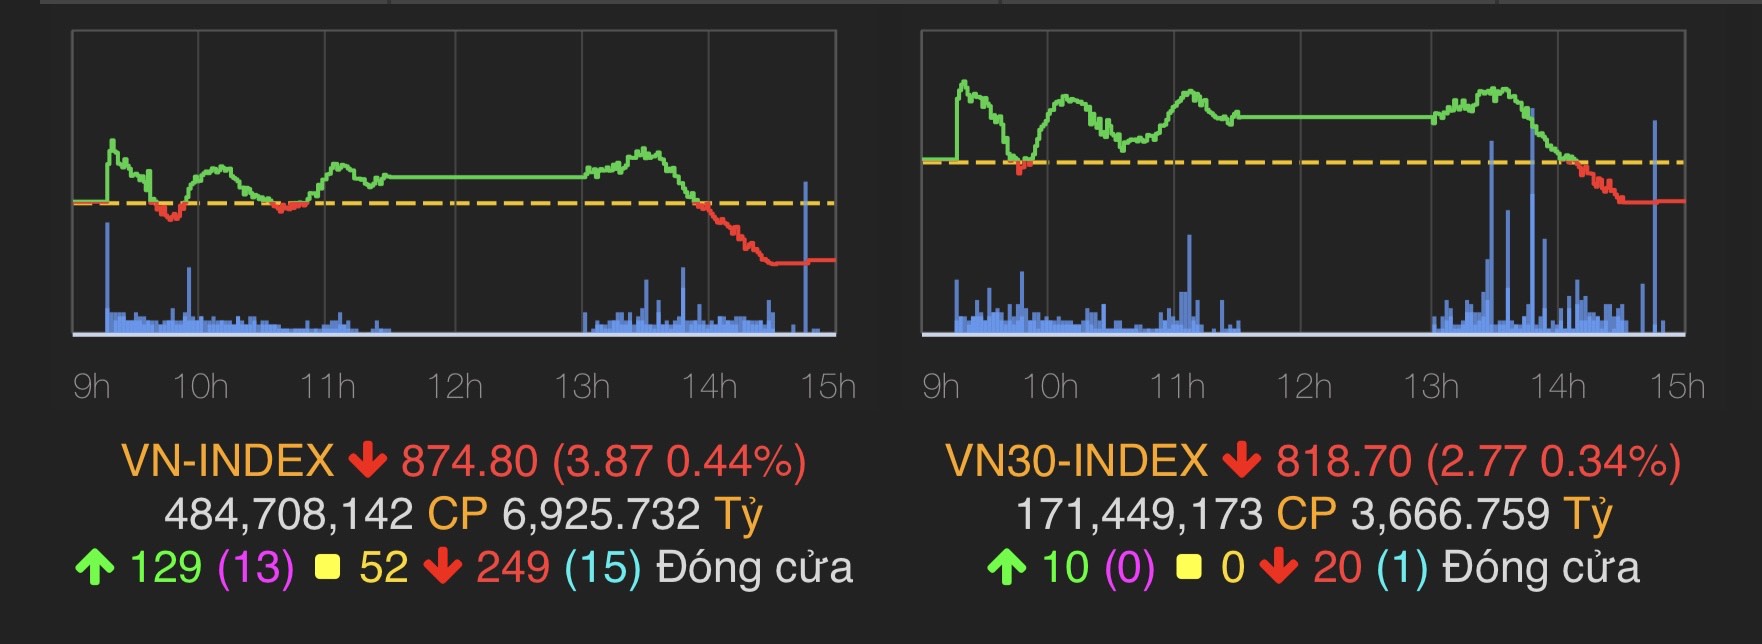 VN-Index giảm 3,78 điểm (0,44%) về mốc 874,8 điểm.&nbsp;